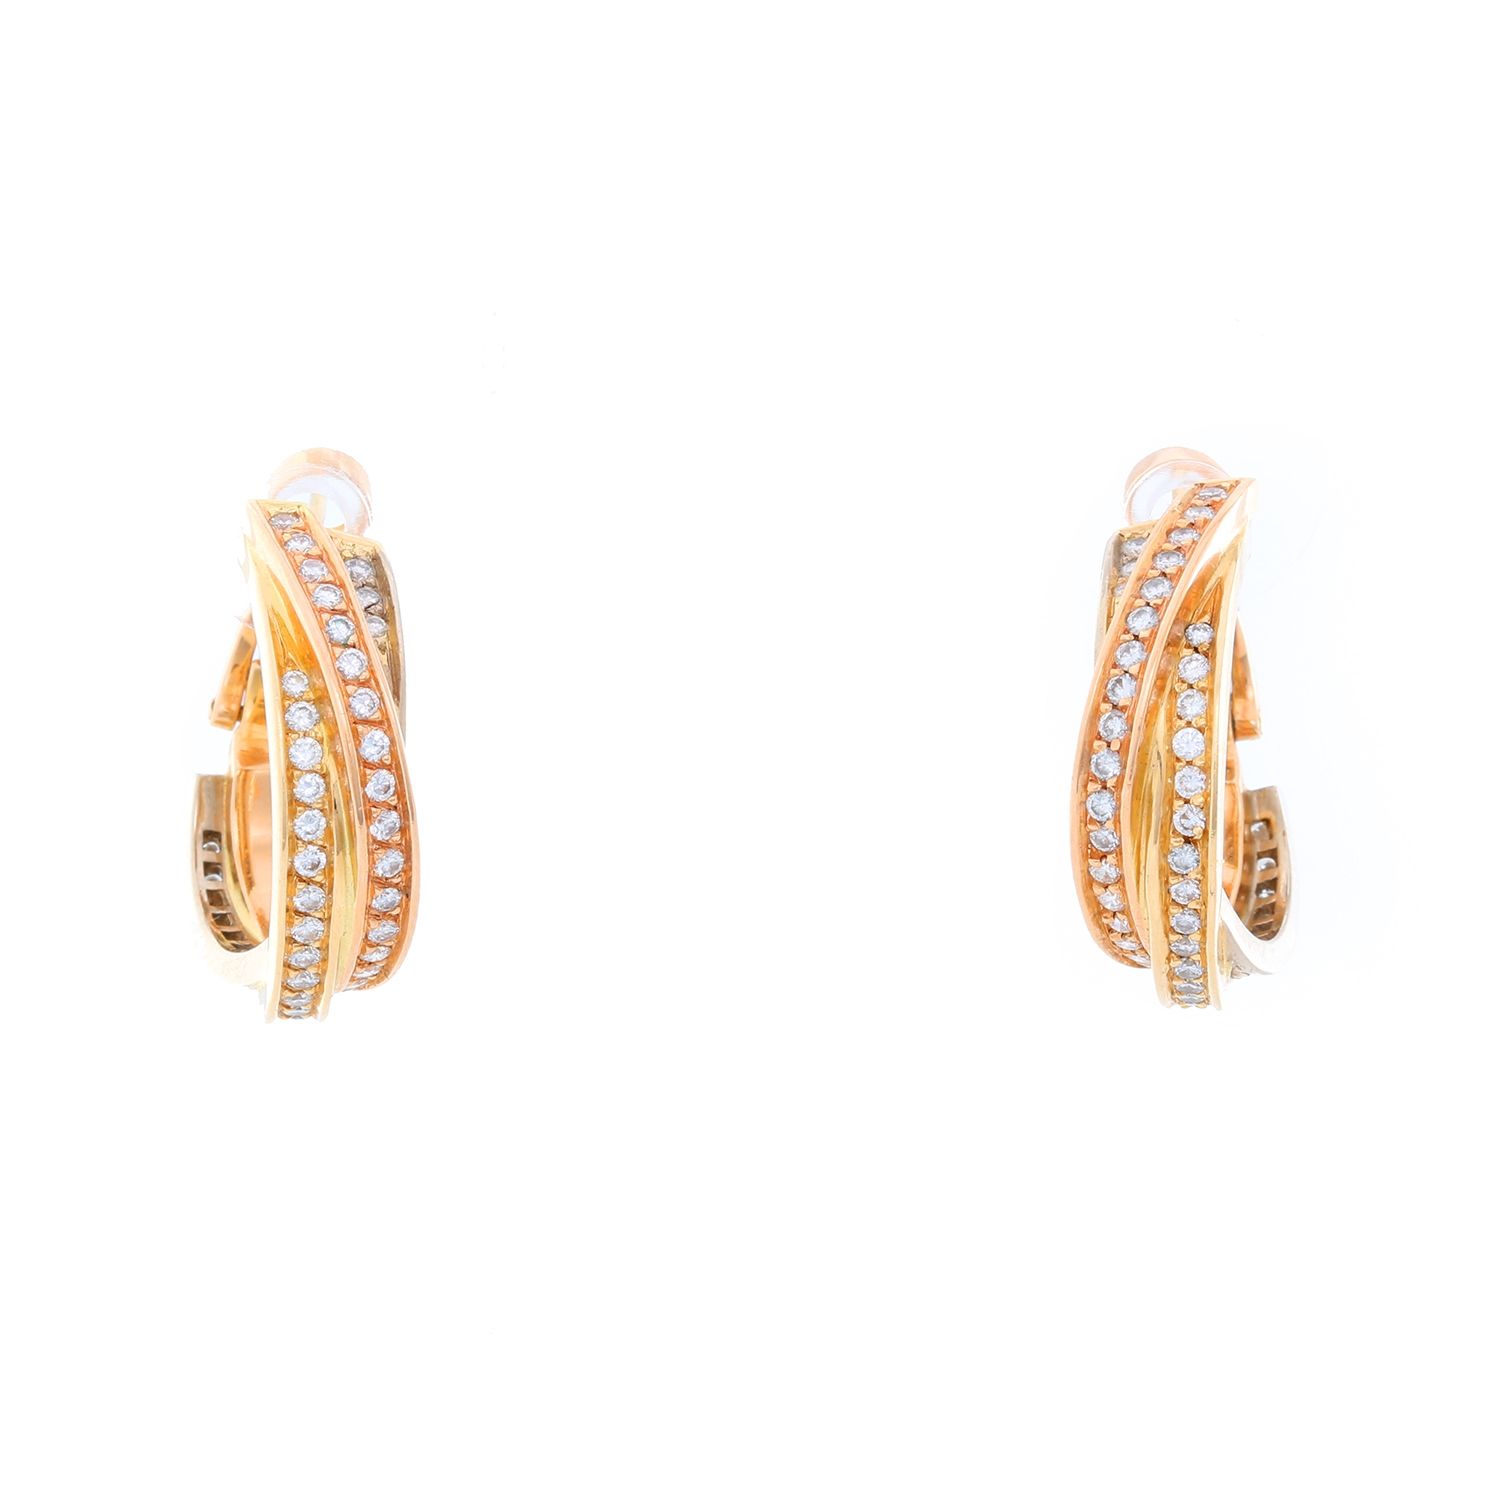 Vintage Cartier Diamond Trinity C Earrings at Susannah Lovis Jewellers